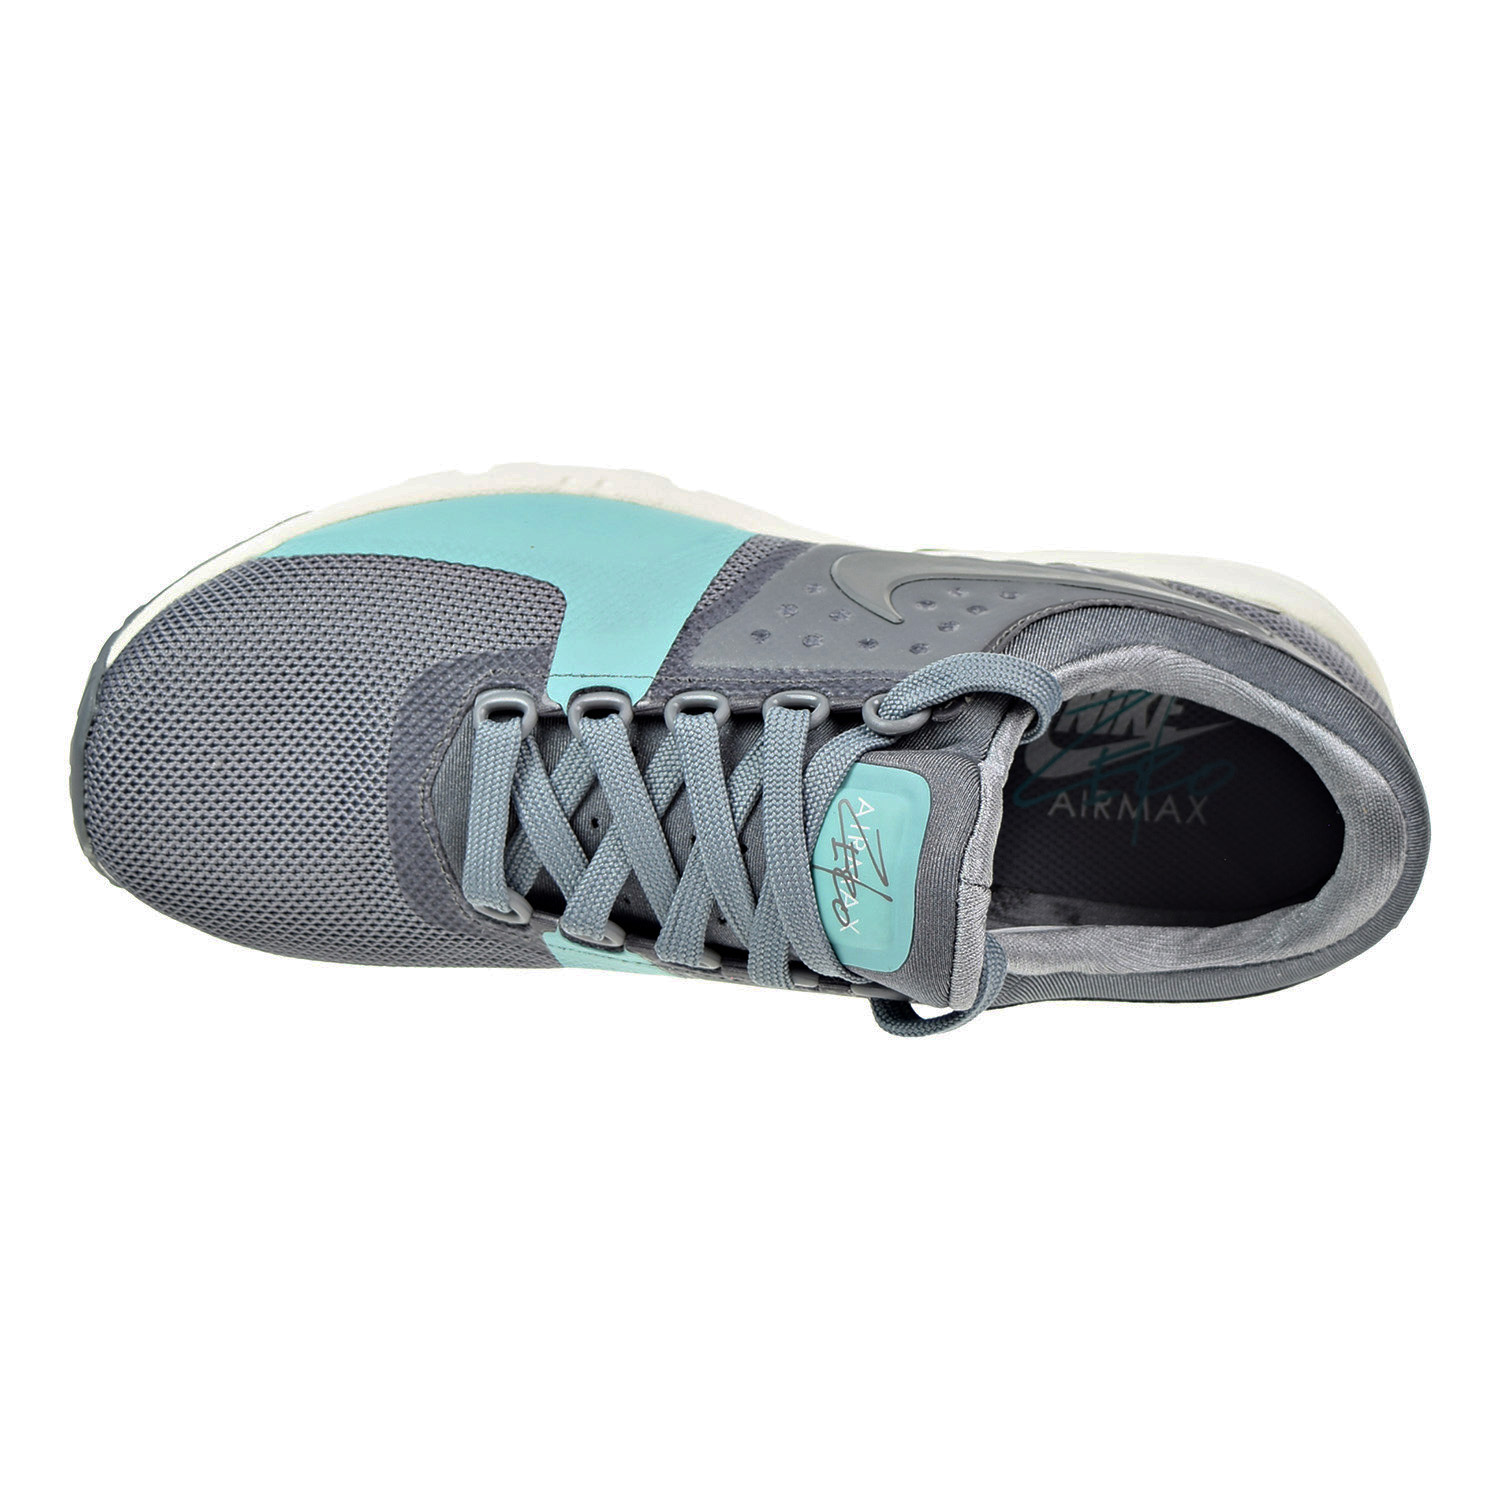 Nike Air Max Zero Women's Running Shoe Cool Grey/Sail/Washed Teal 857661-001 - image 5 of 6